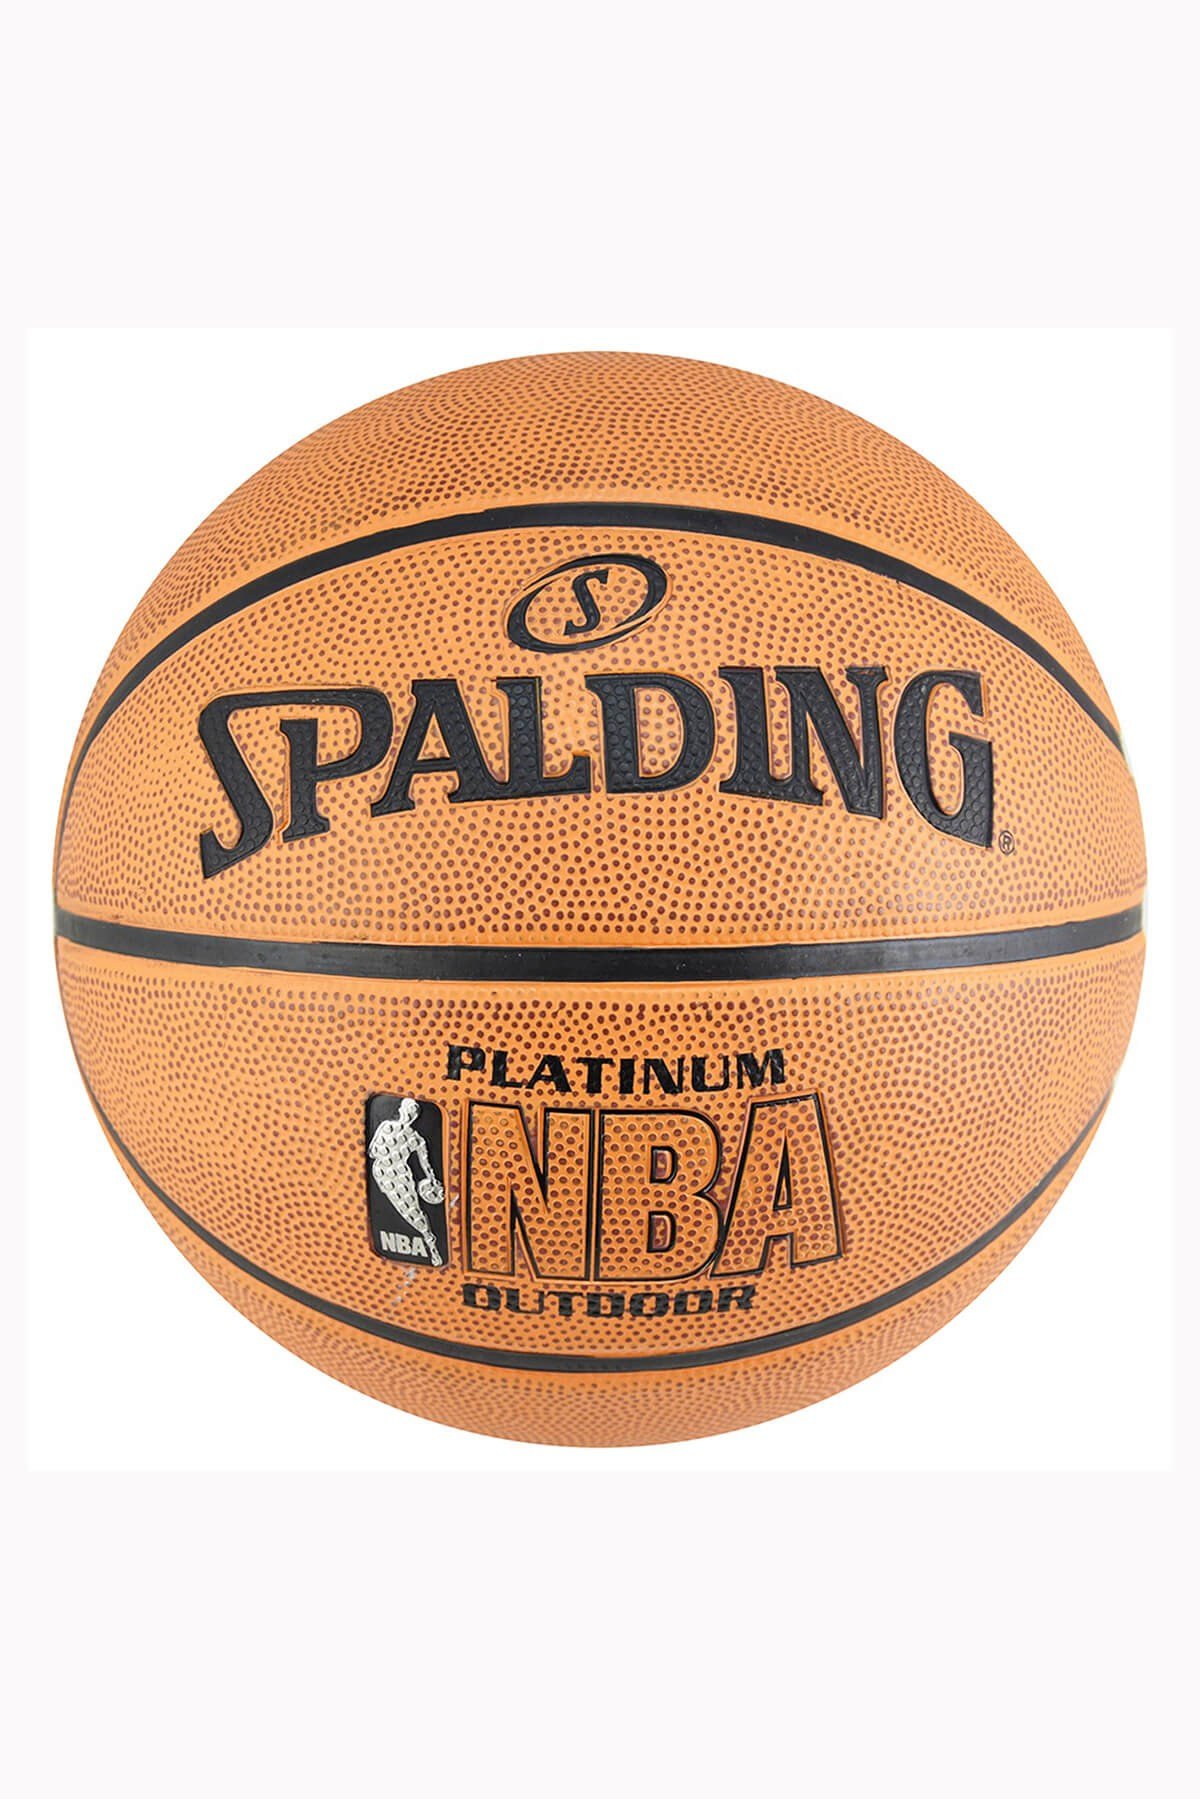 Basketbol Topları | Spalding NBA Platinium Basketbol Topu No:7